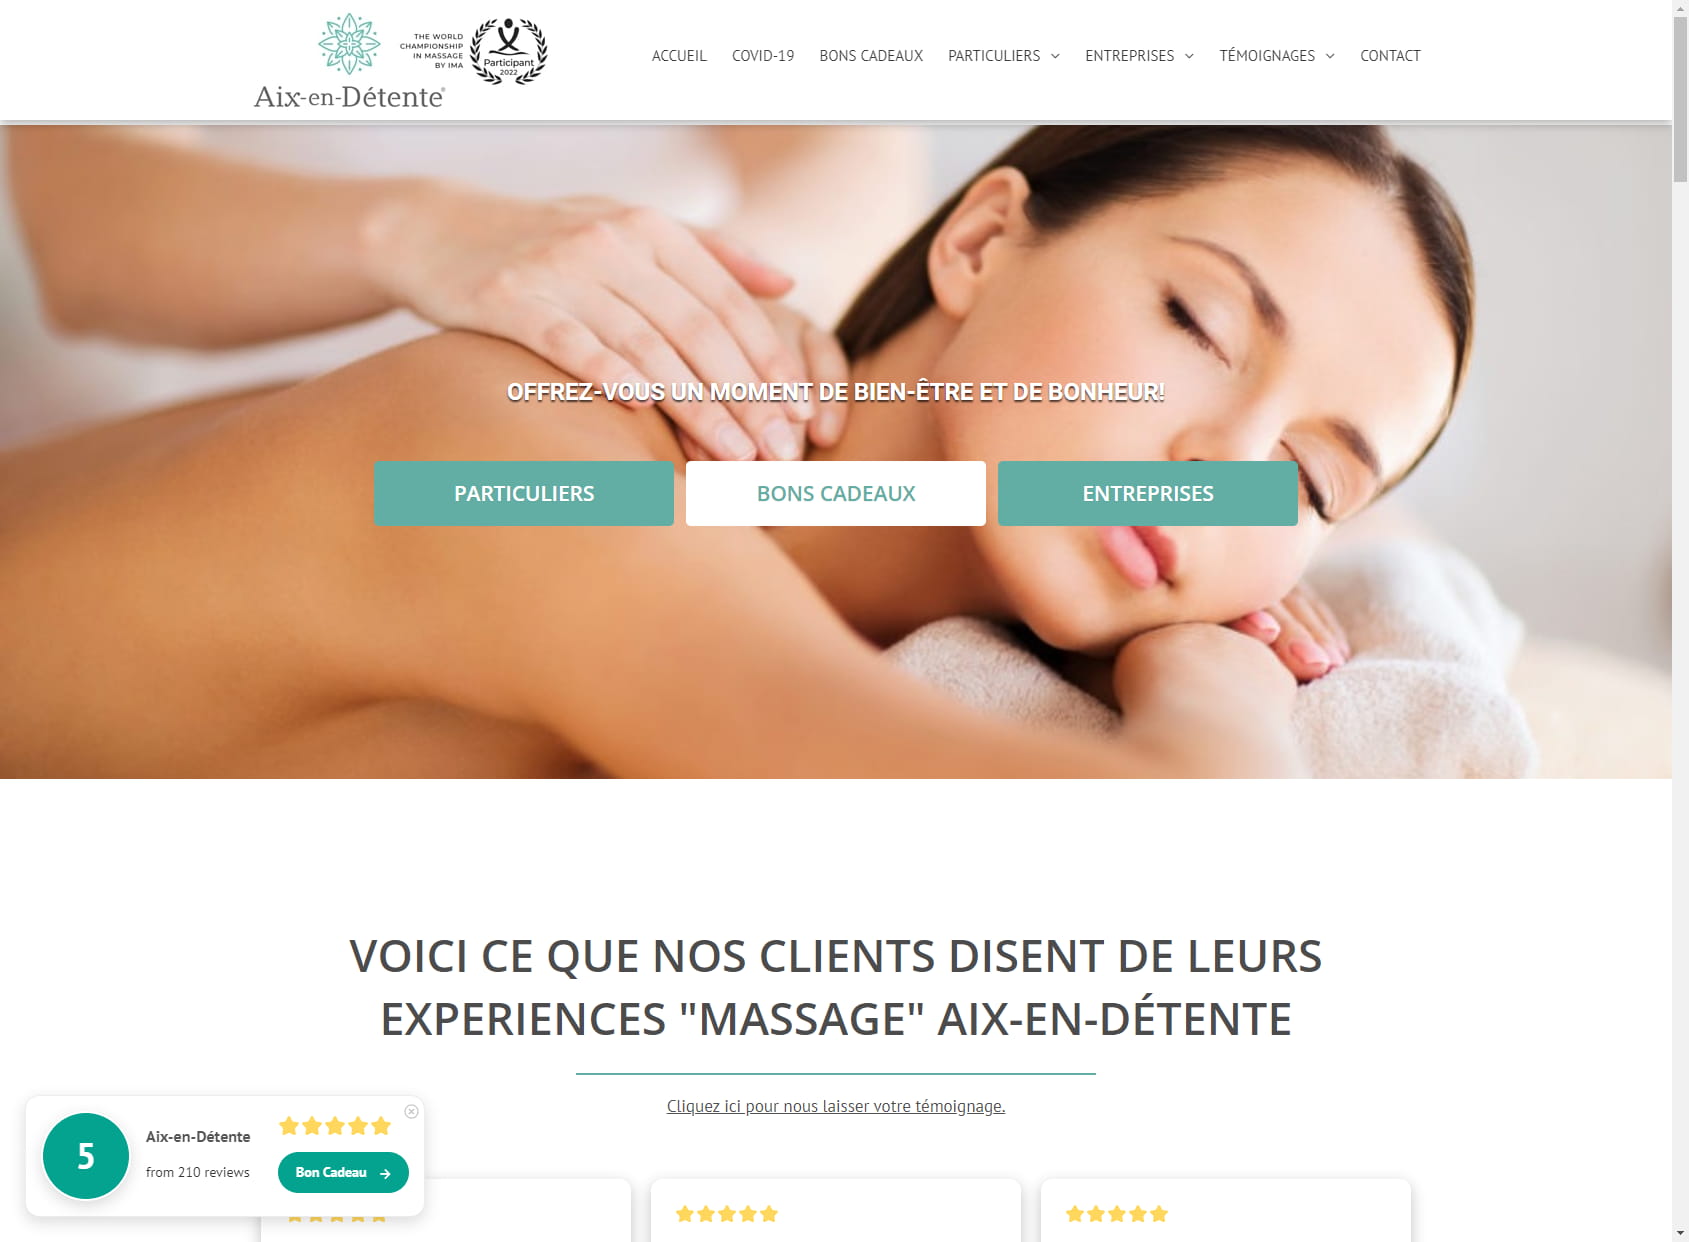 Massage Aix-en-Provence Aix-en-Détente Karine Ranciat